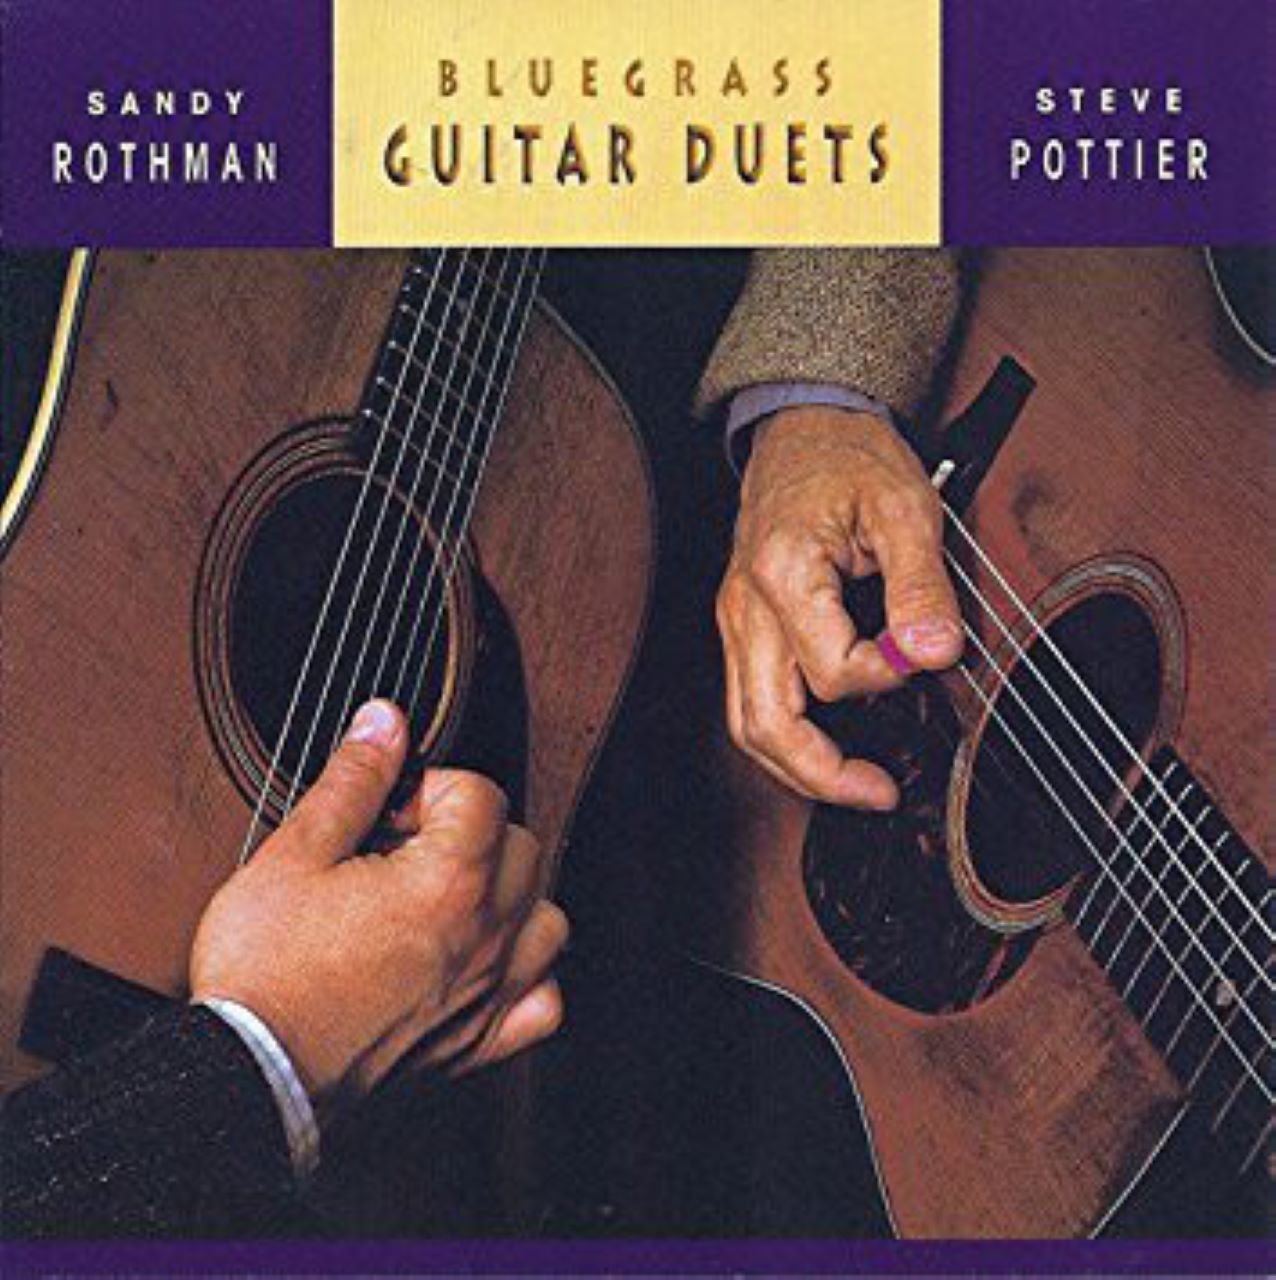 Steve Pottier & Sandy Rothman - Bluegrass Guitar Duets cover album